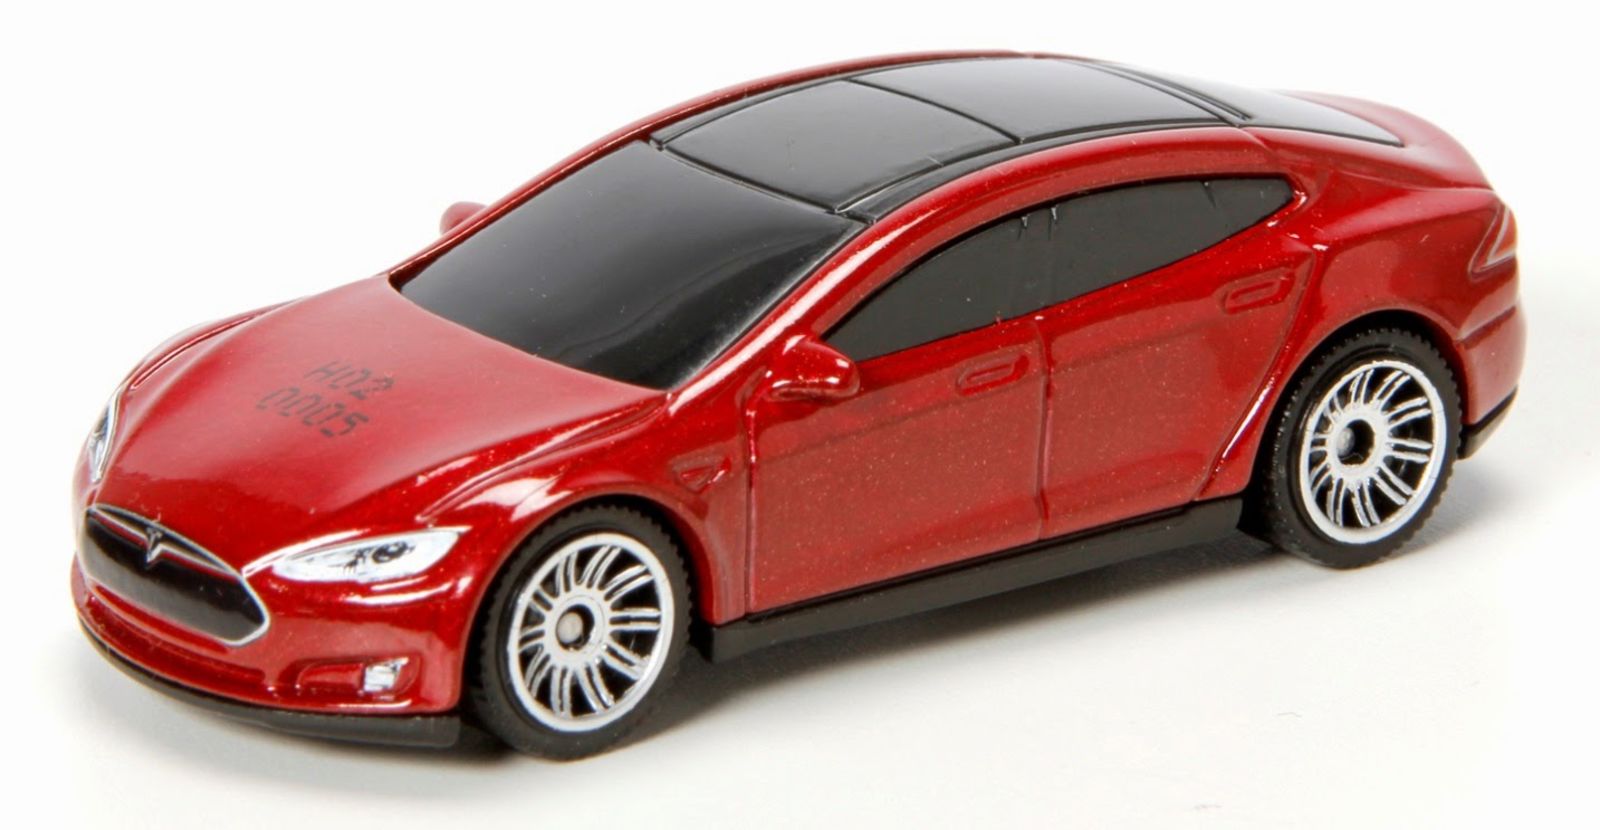 Illustration for article titled The New Matchbox Tesla Model S!